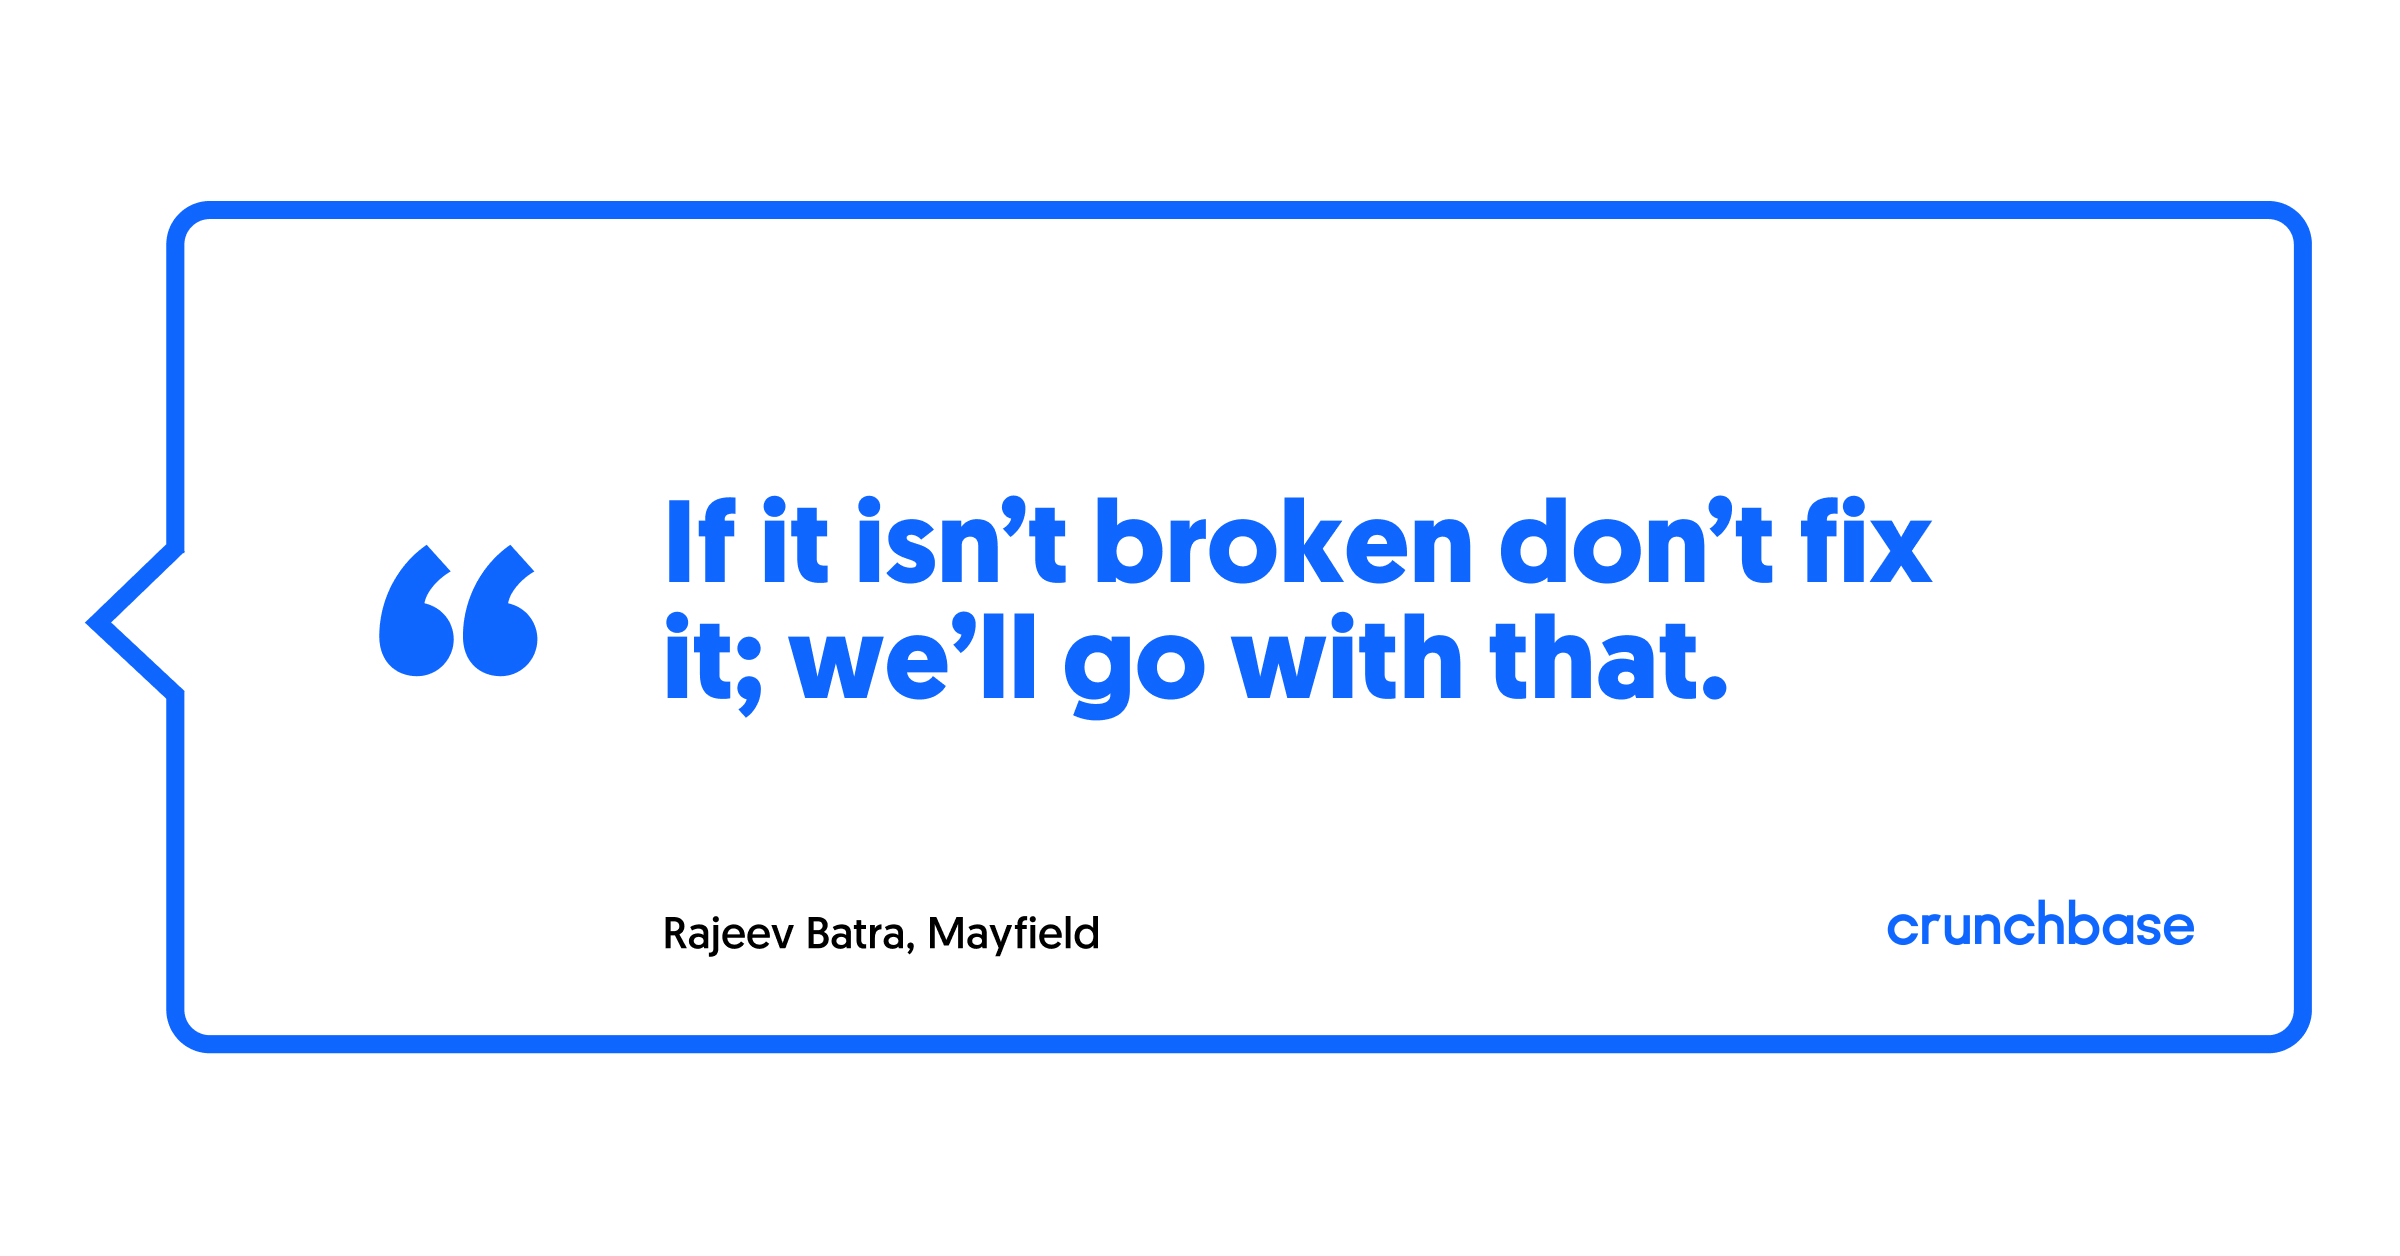 Go-to-market leaders Rajeev Batra quote